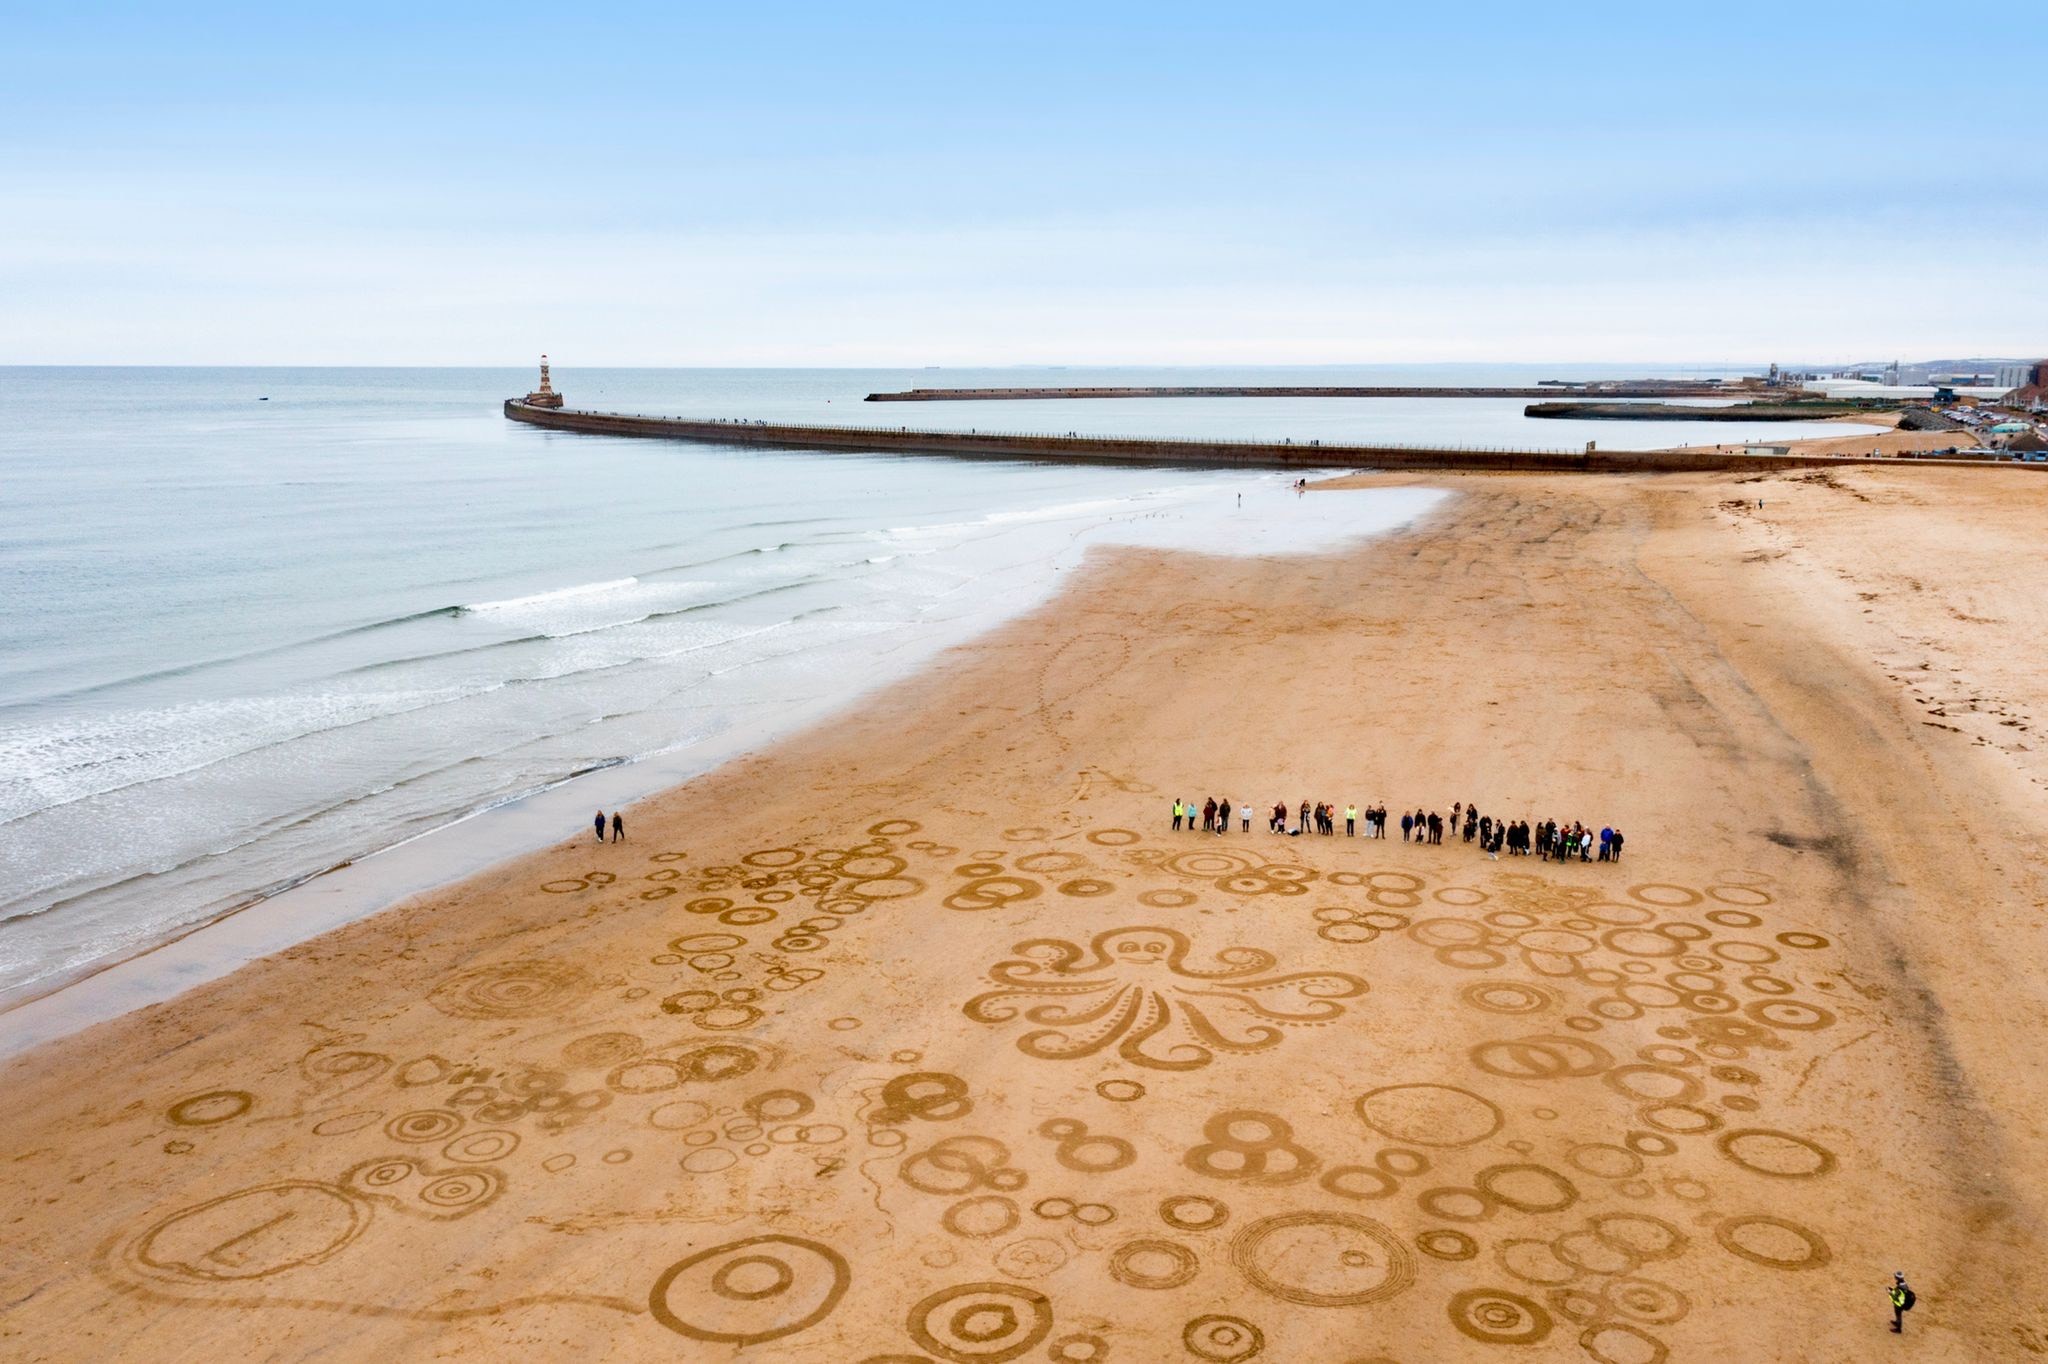 Sand art on Roker Beach